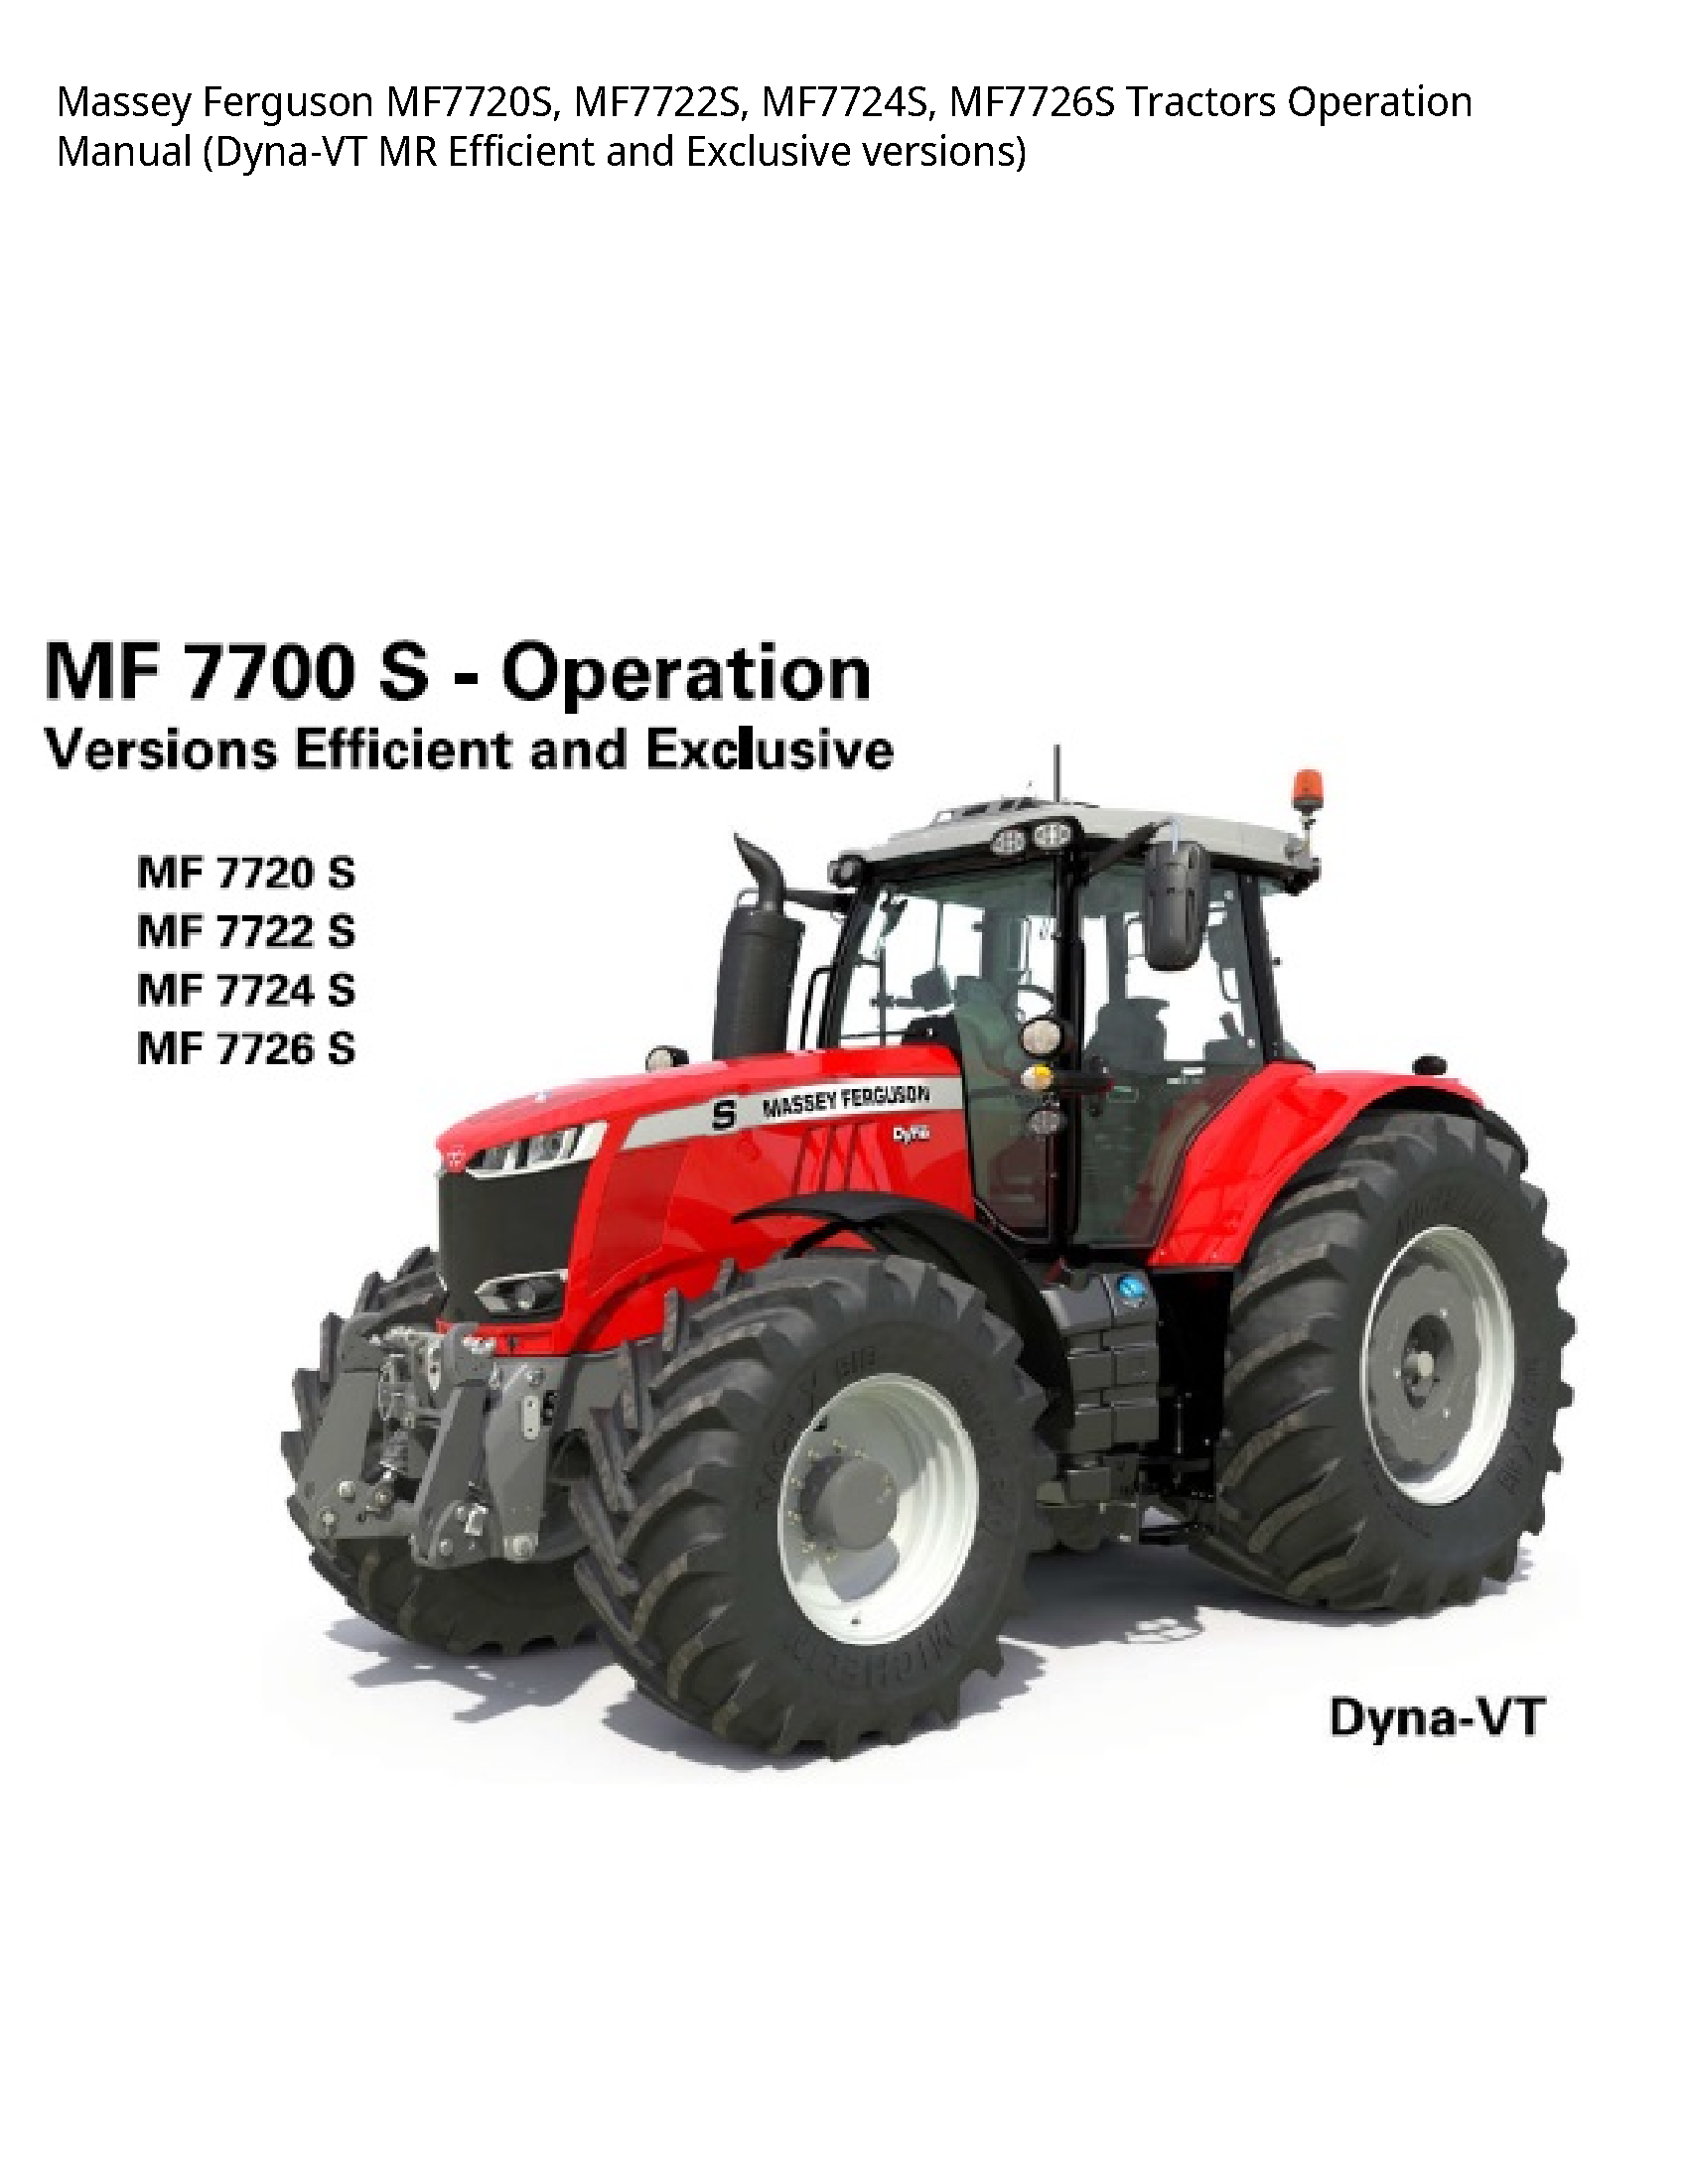 Massey Ferguson MF7720S Tractors Operation manual